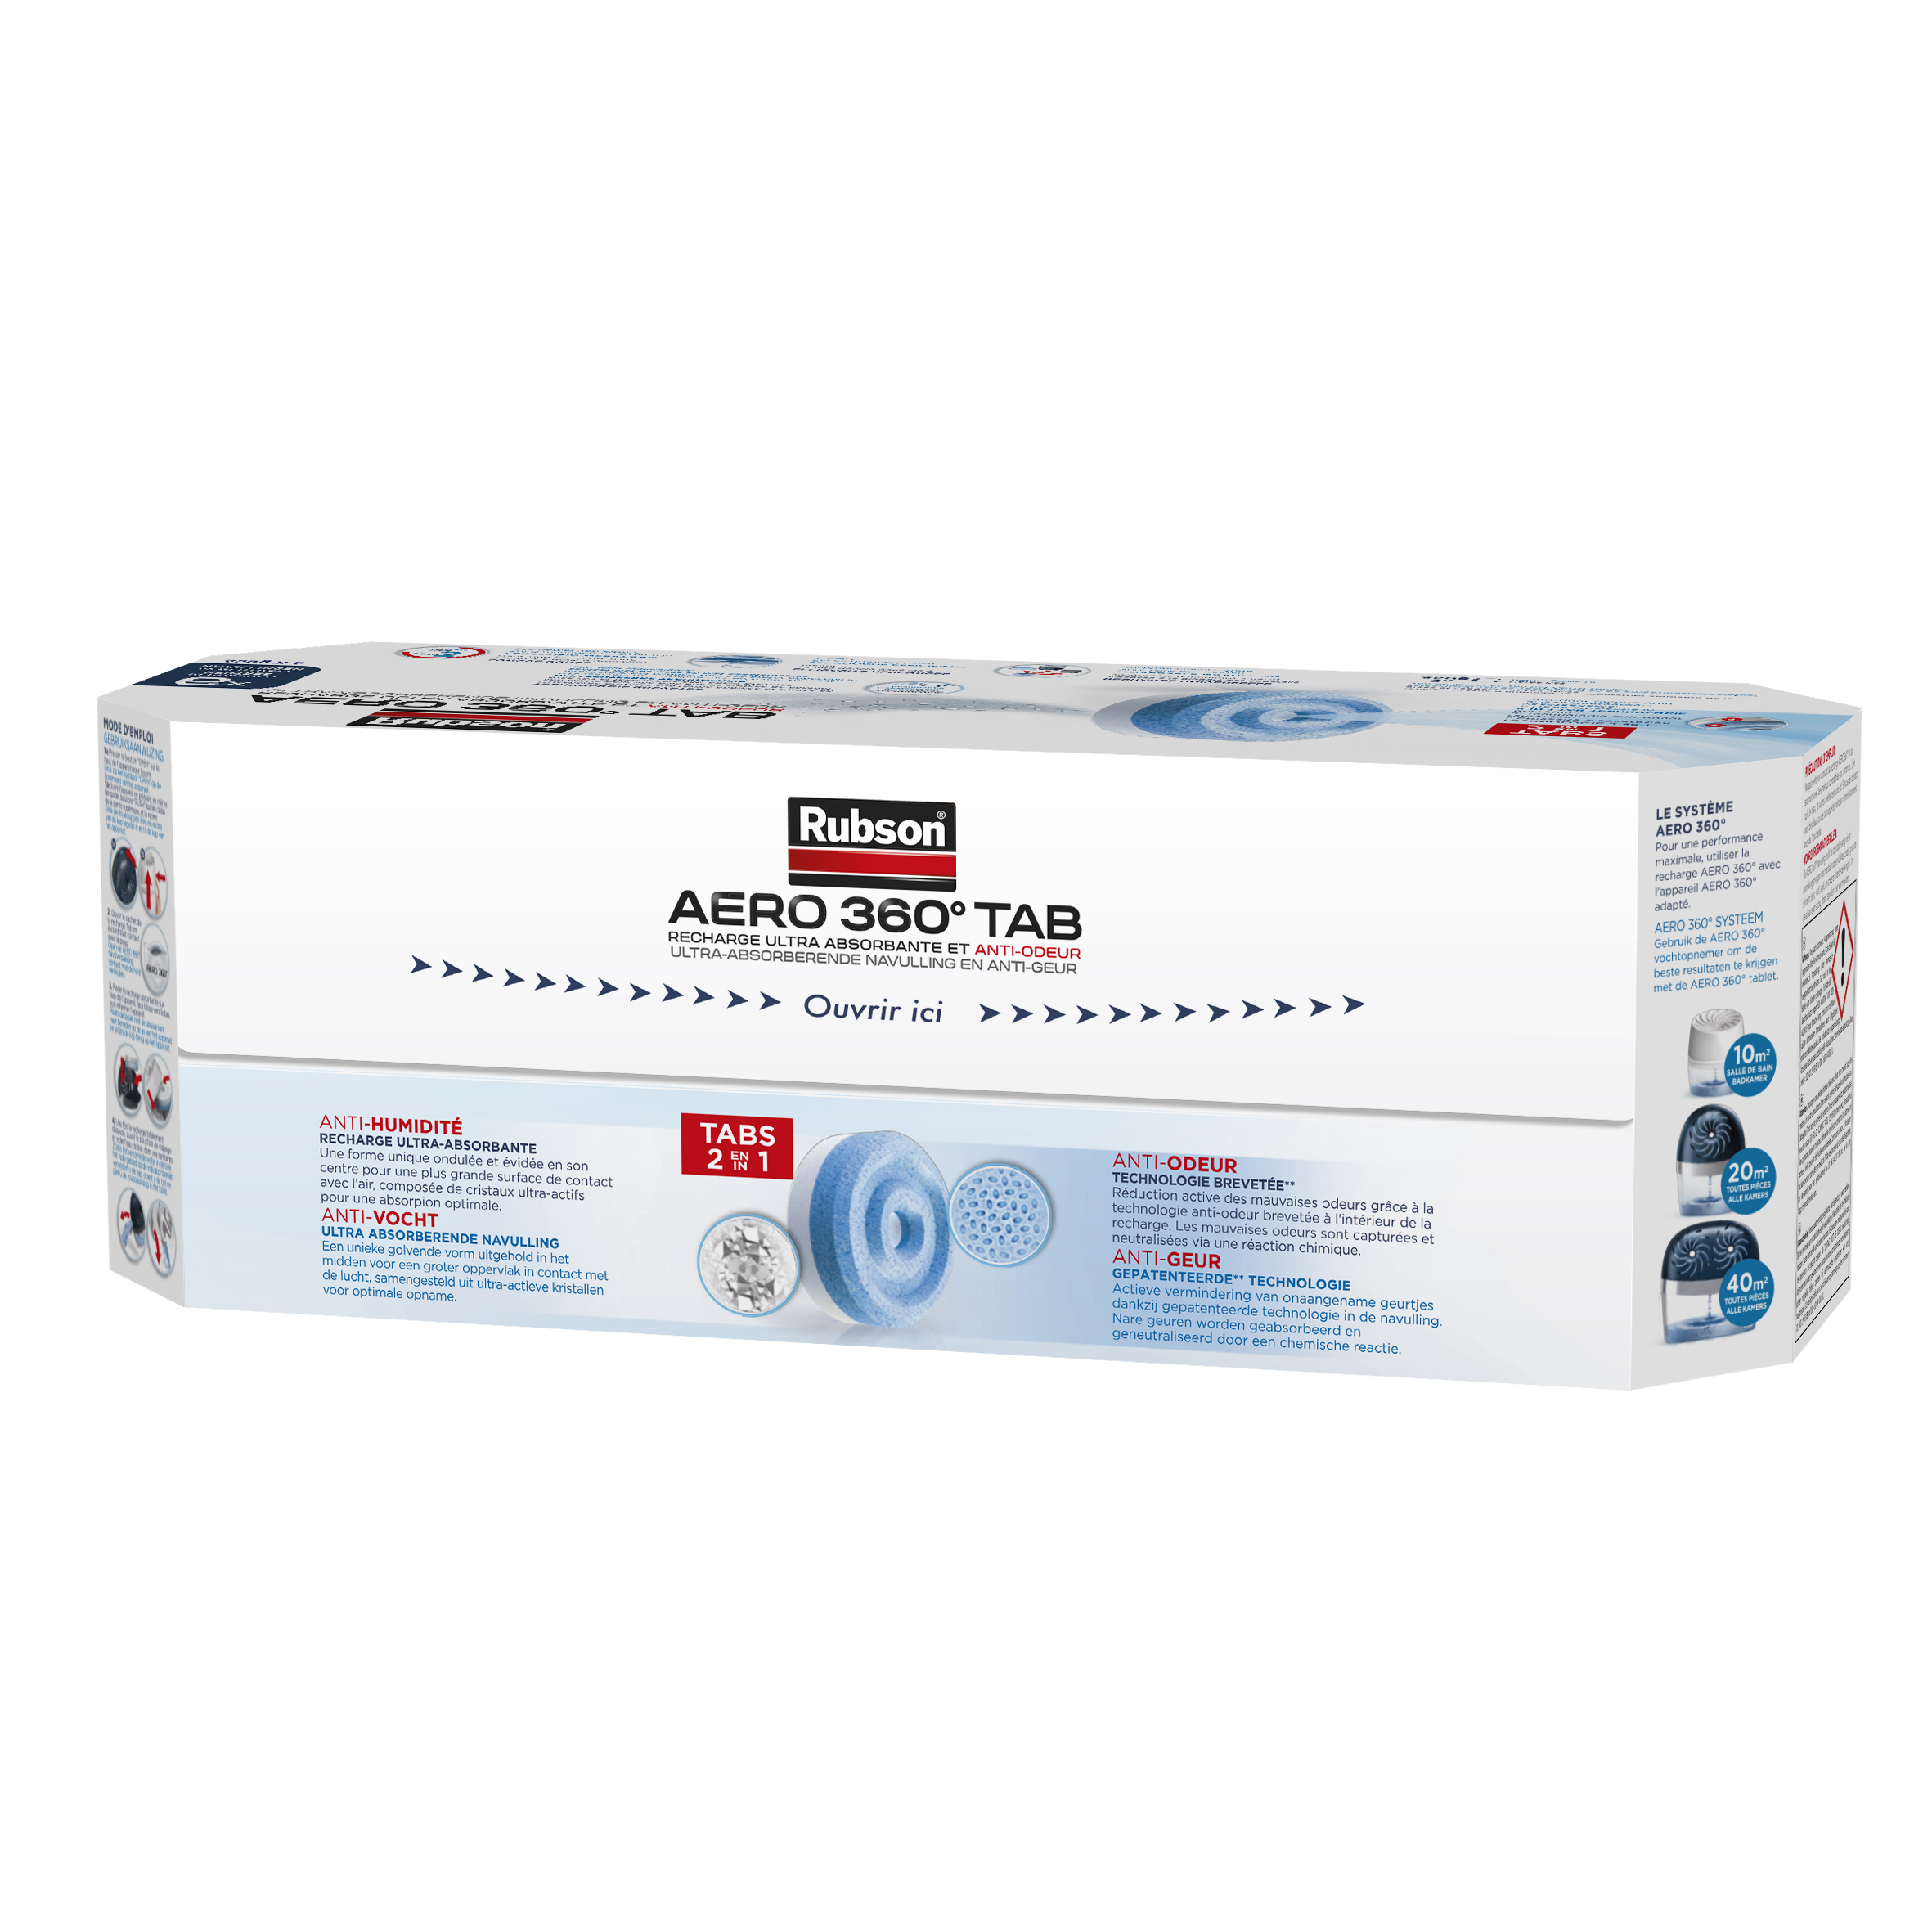 Rubson absorbeur aero 360 450gr + 1 tab